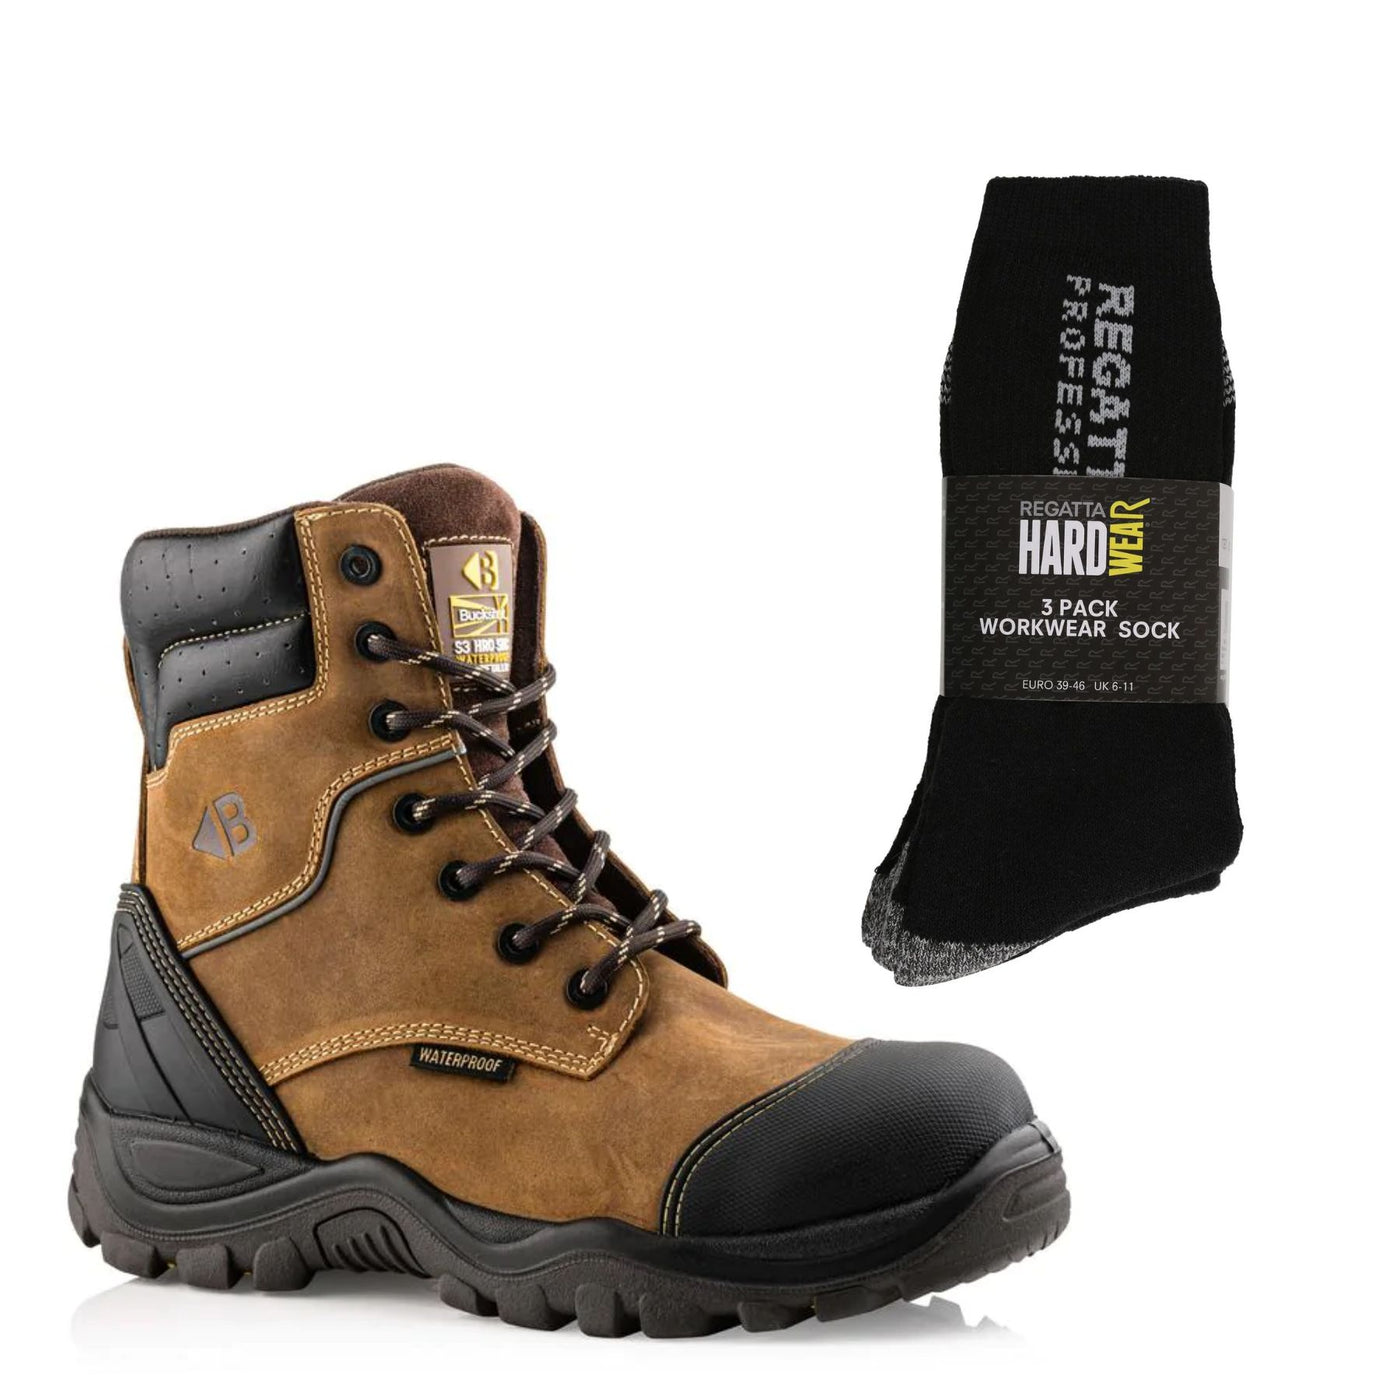 Buckbootz BSH008 Special Offer Pack - Buckler Buckshot High Leg Zip Safety Boots + 3 Pairs Work Socks